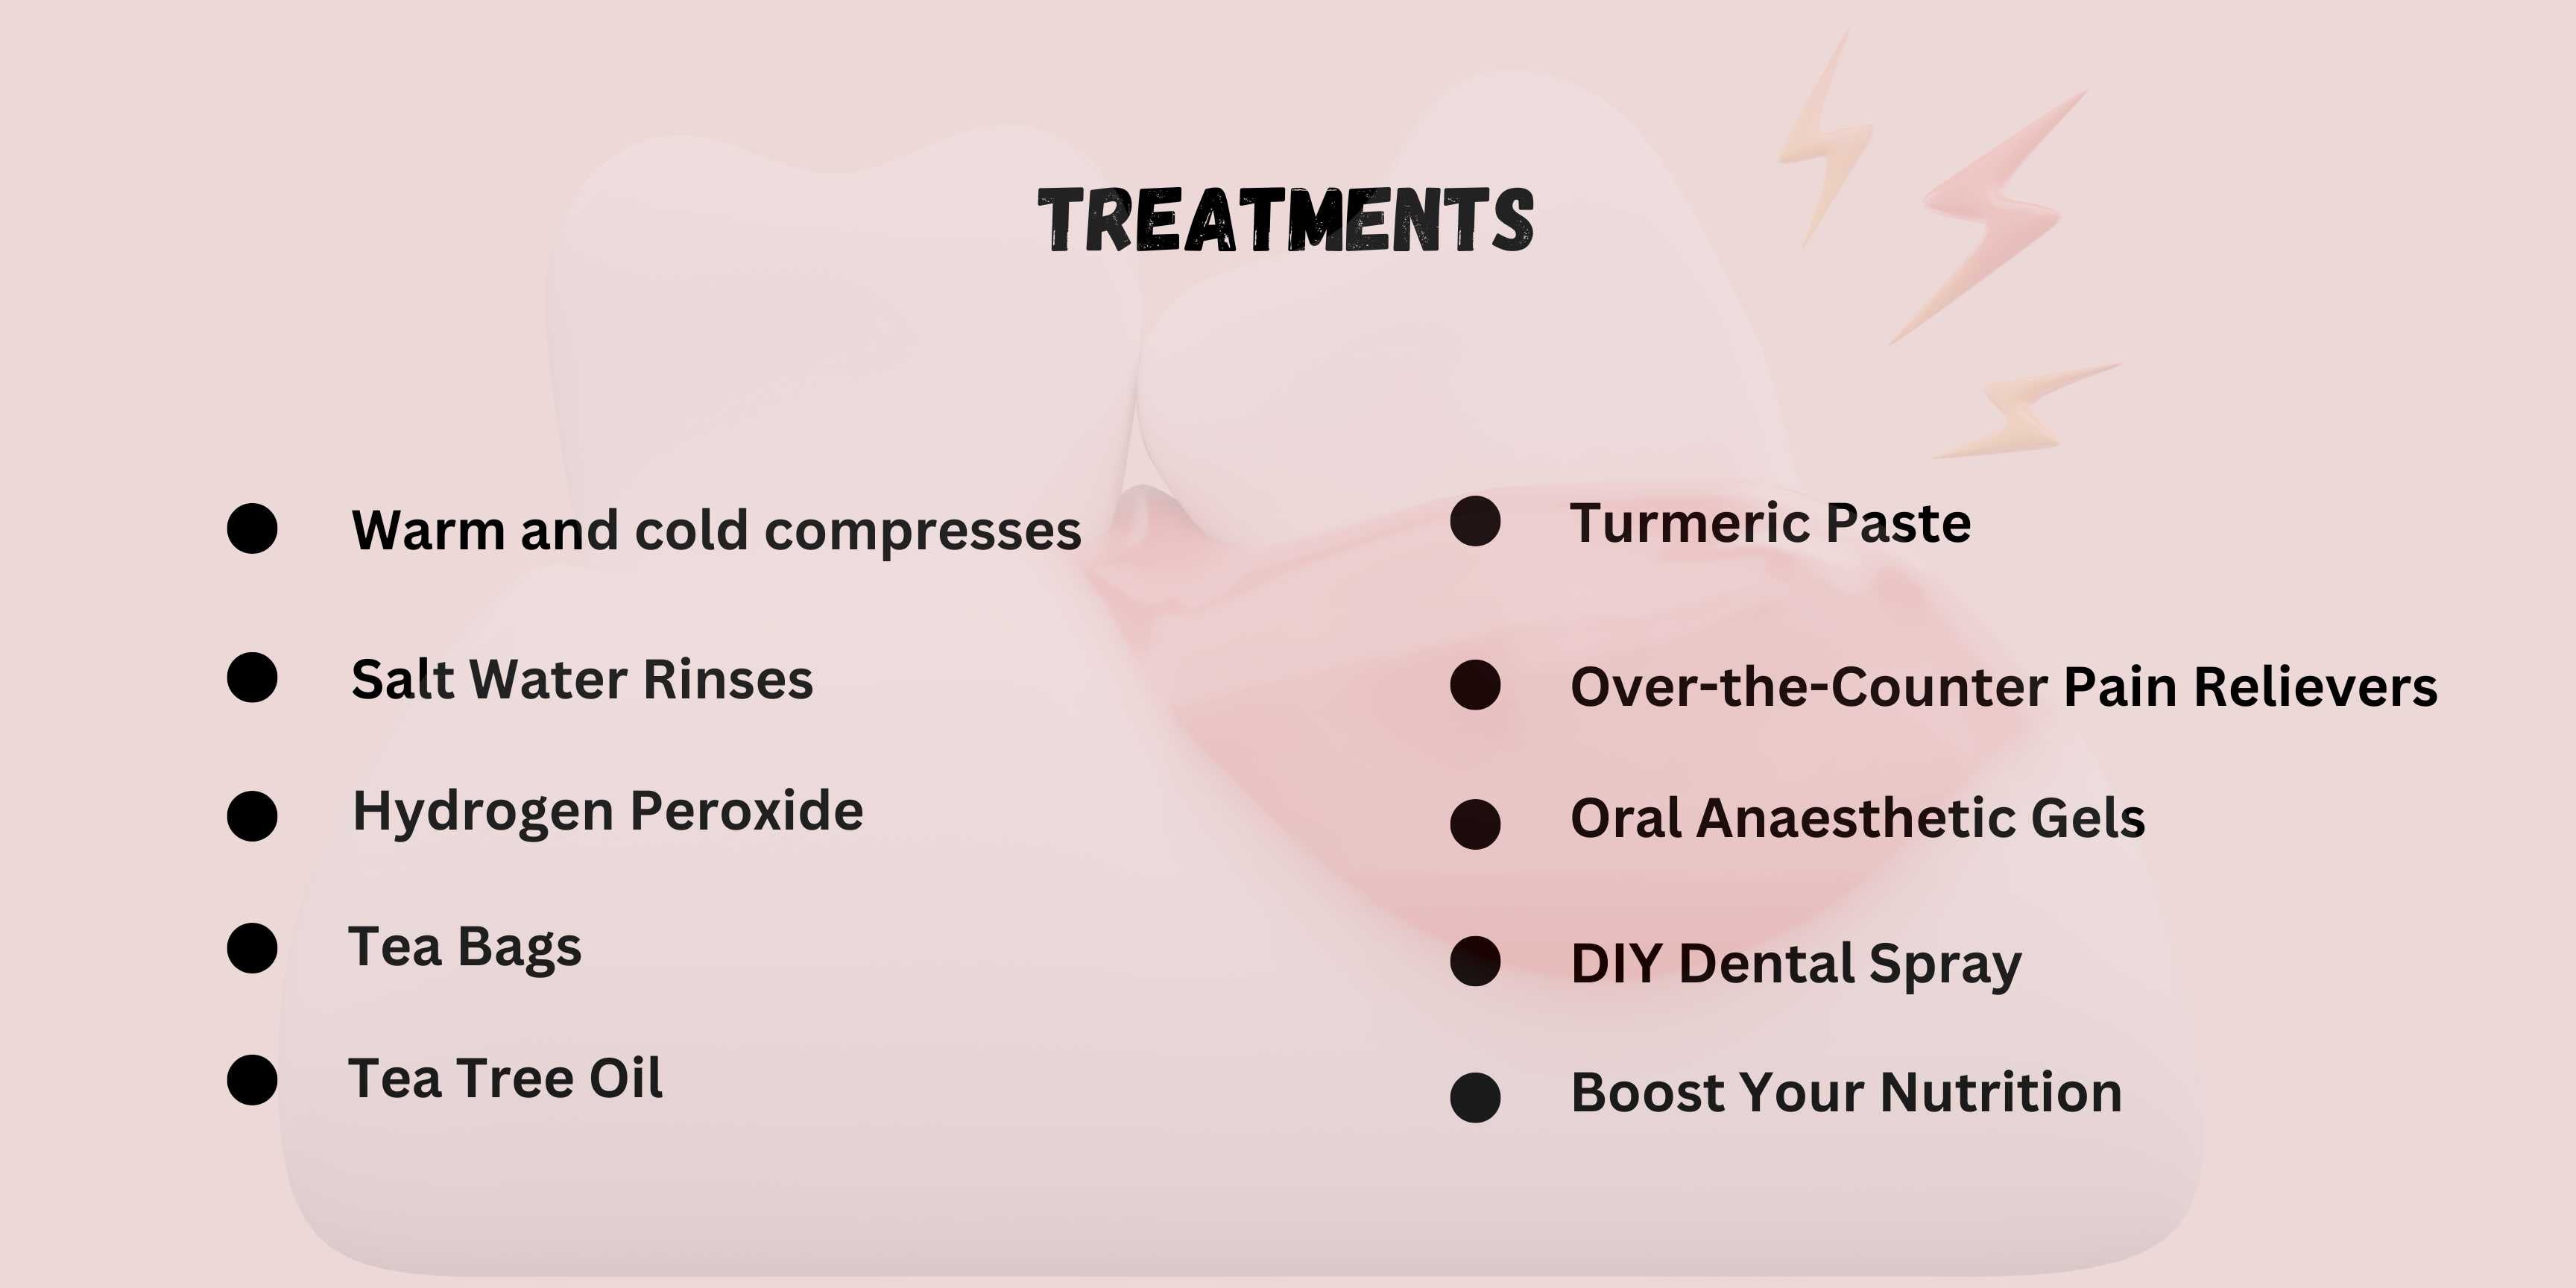 Image shows Treatments for swollen gums